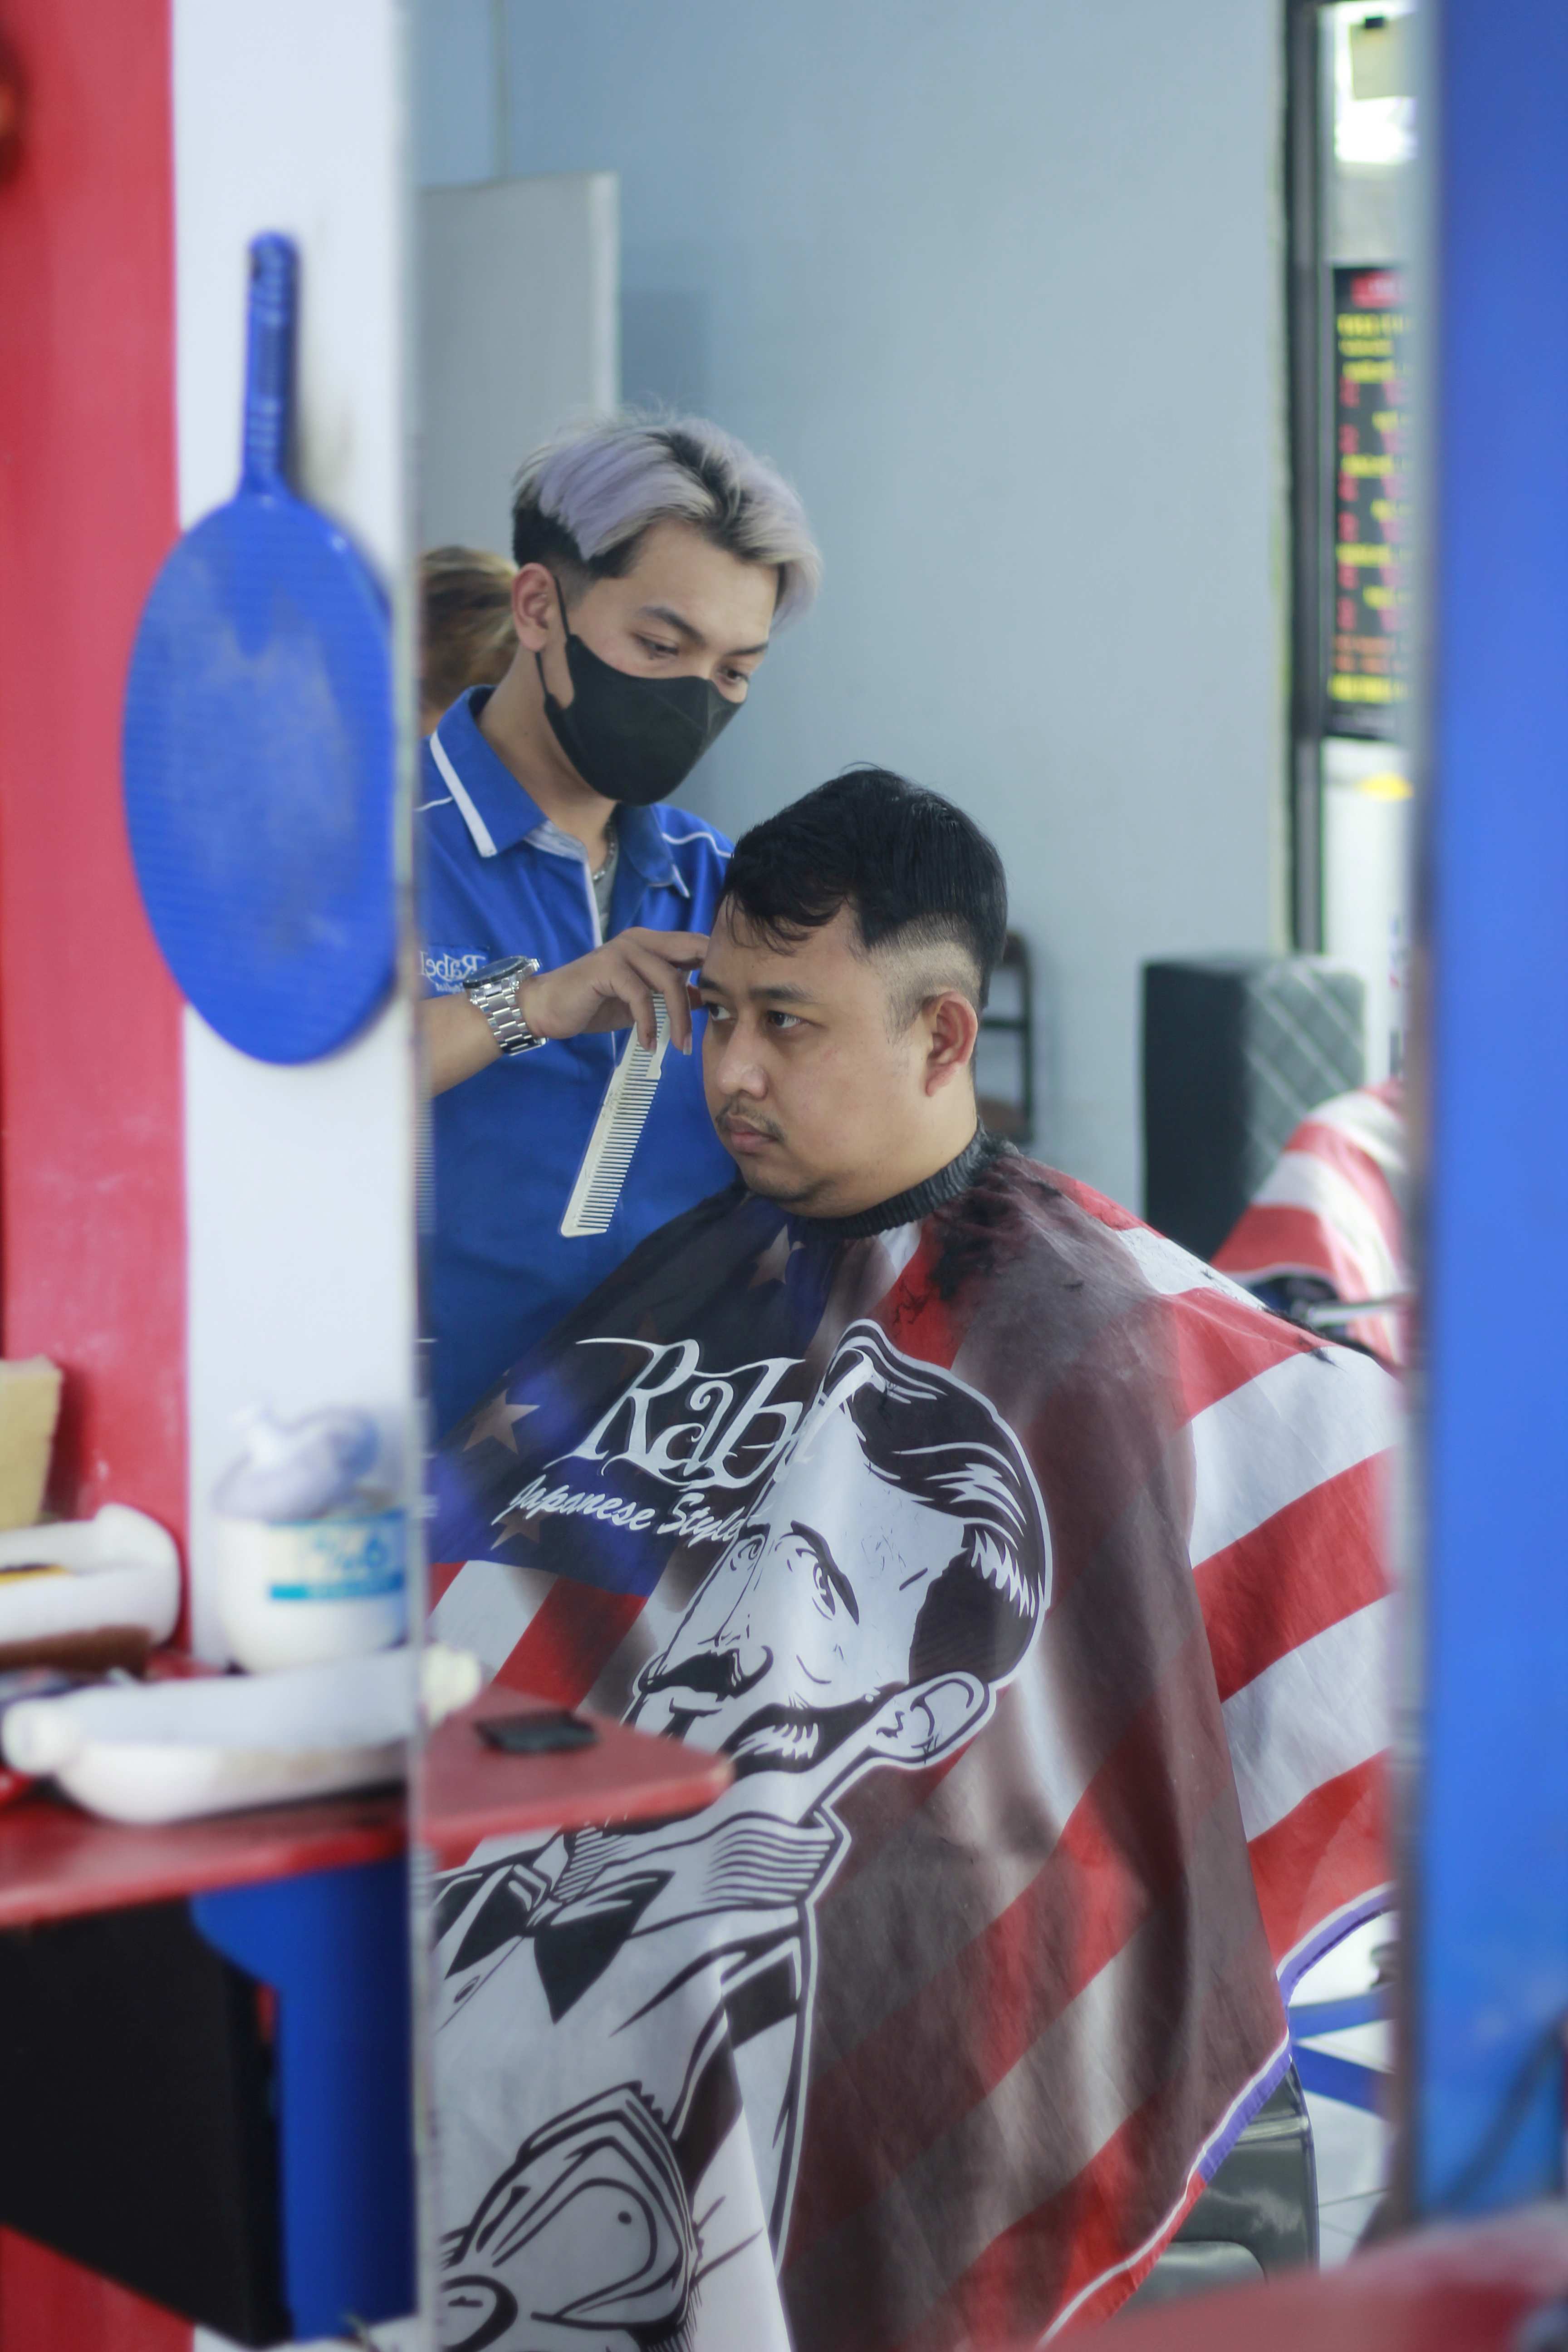 Harga Cukur Rambut Di Kota Malang Keren